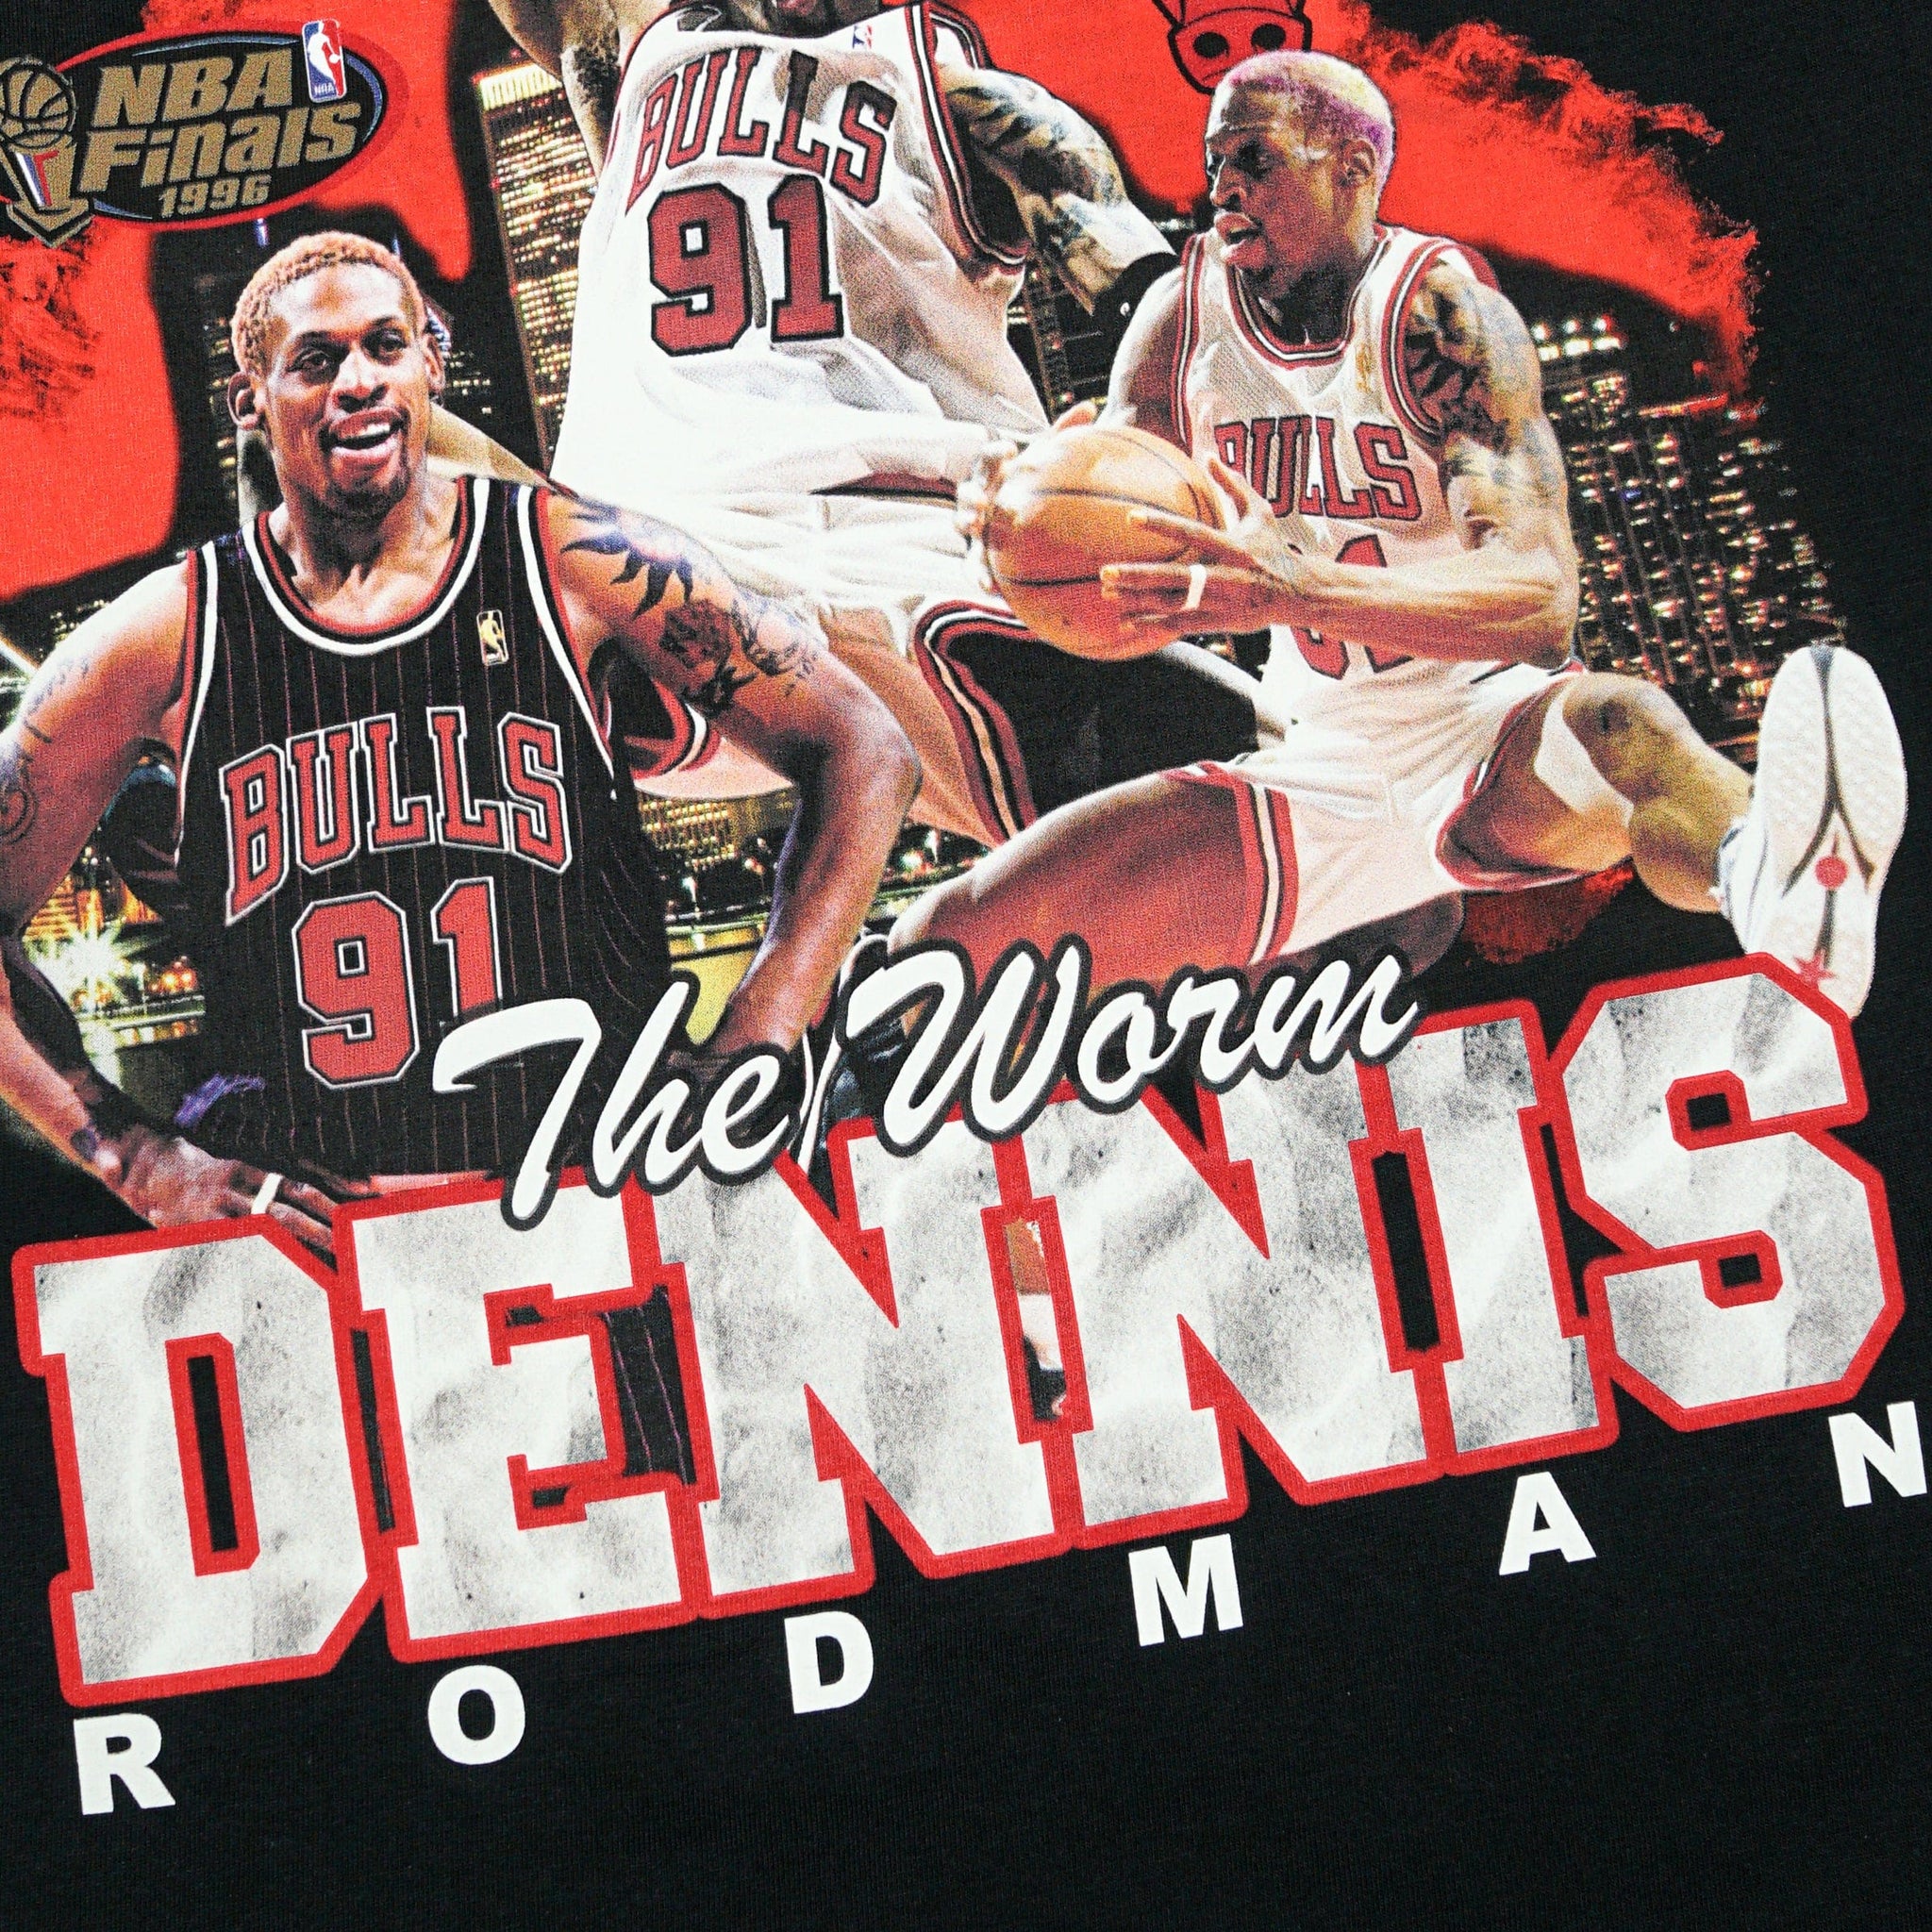 Dennis Rodman Chicago Bulls Mitchell & Ness Hardwood Classics Bling Concert  Player Shirt - Peanutstee